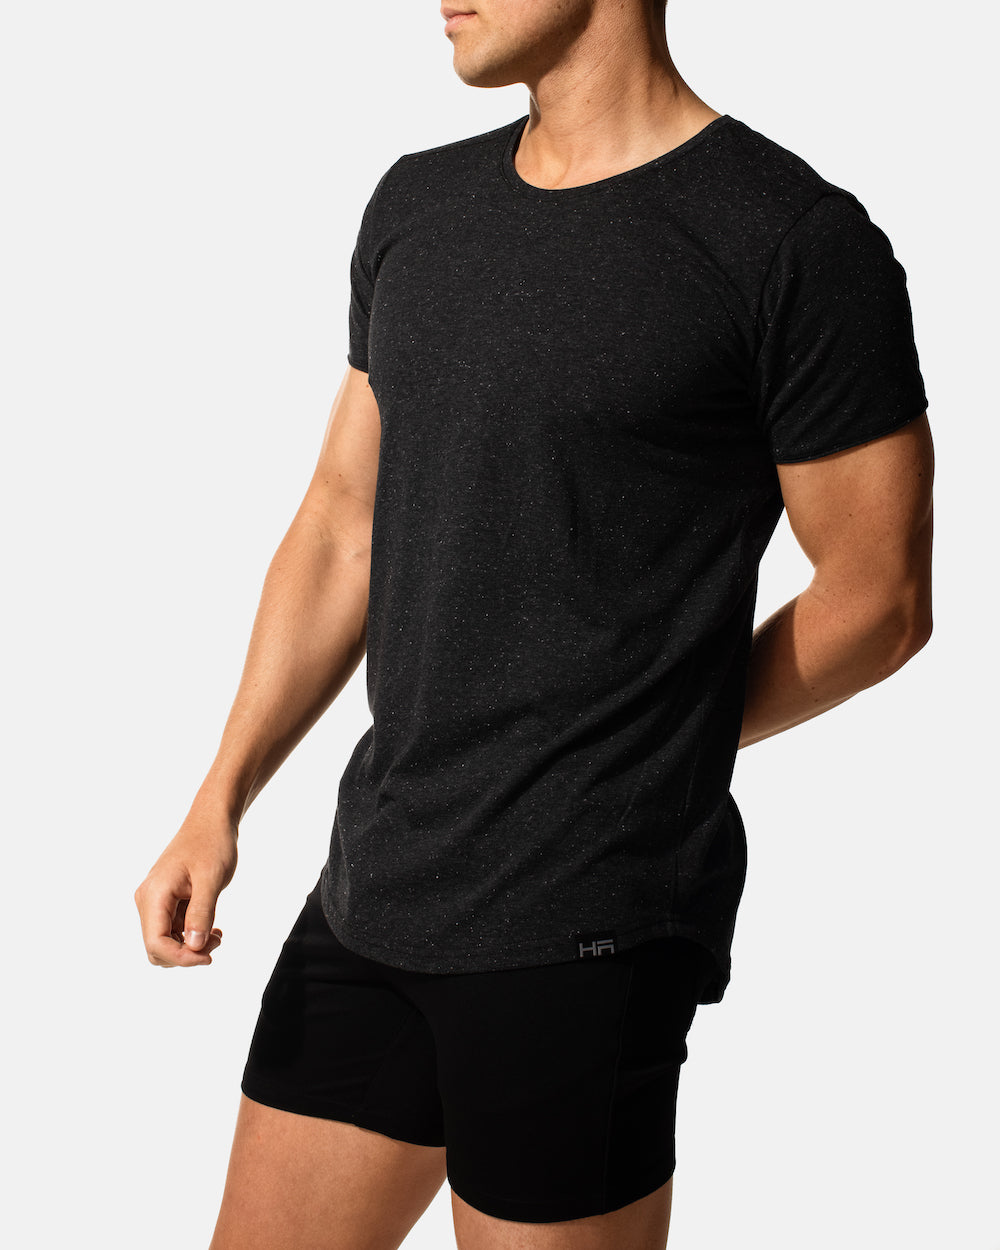 Utility T-Shirt - Black